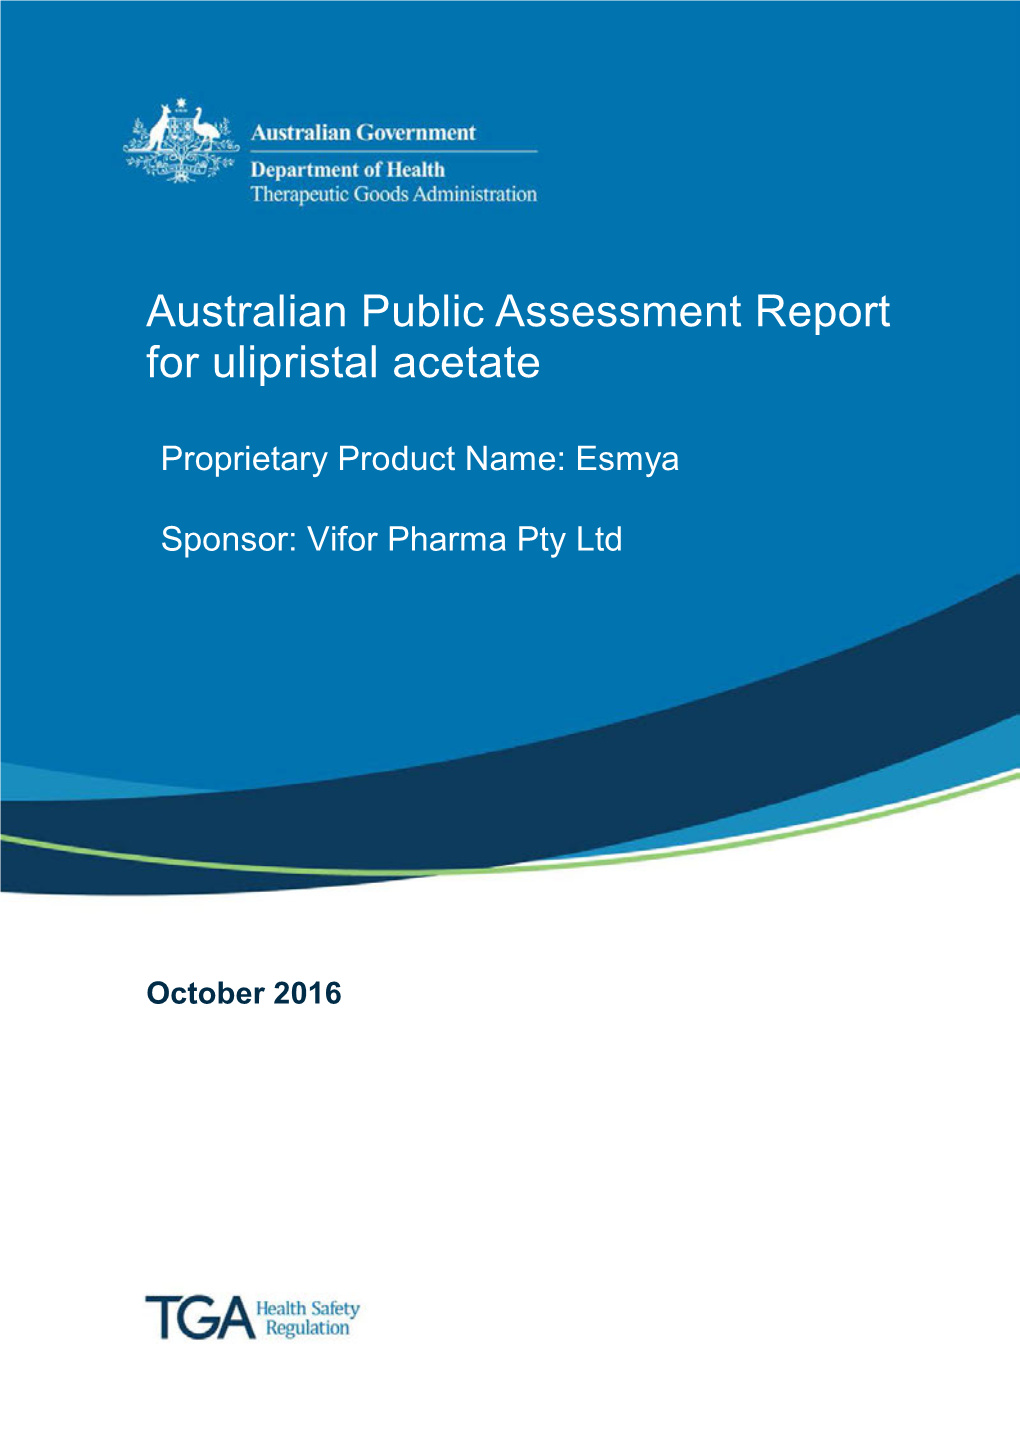 Australian Public Assessment Report for Ulipristal Acetate